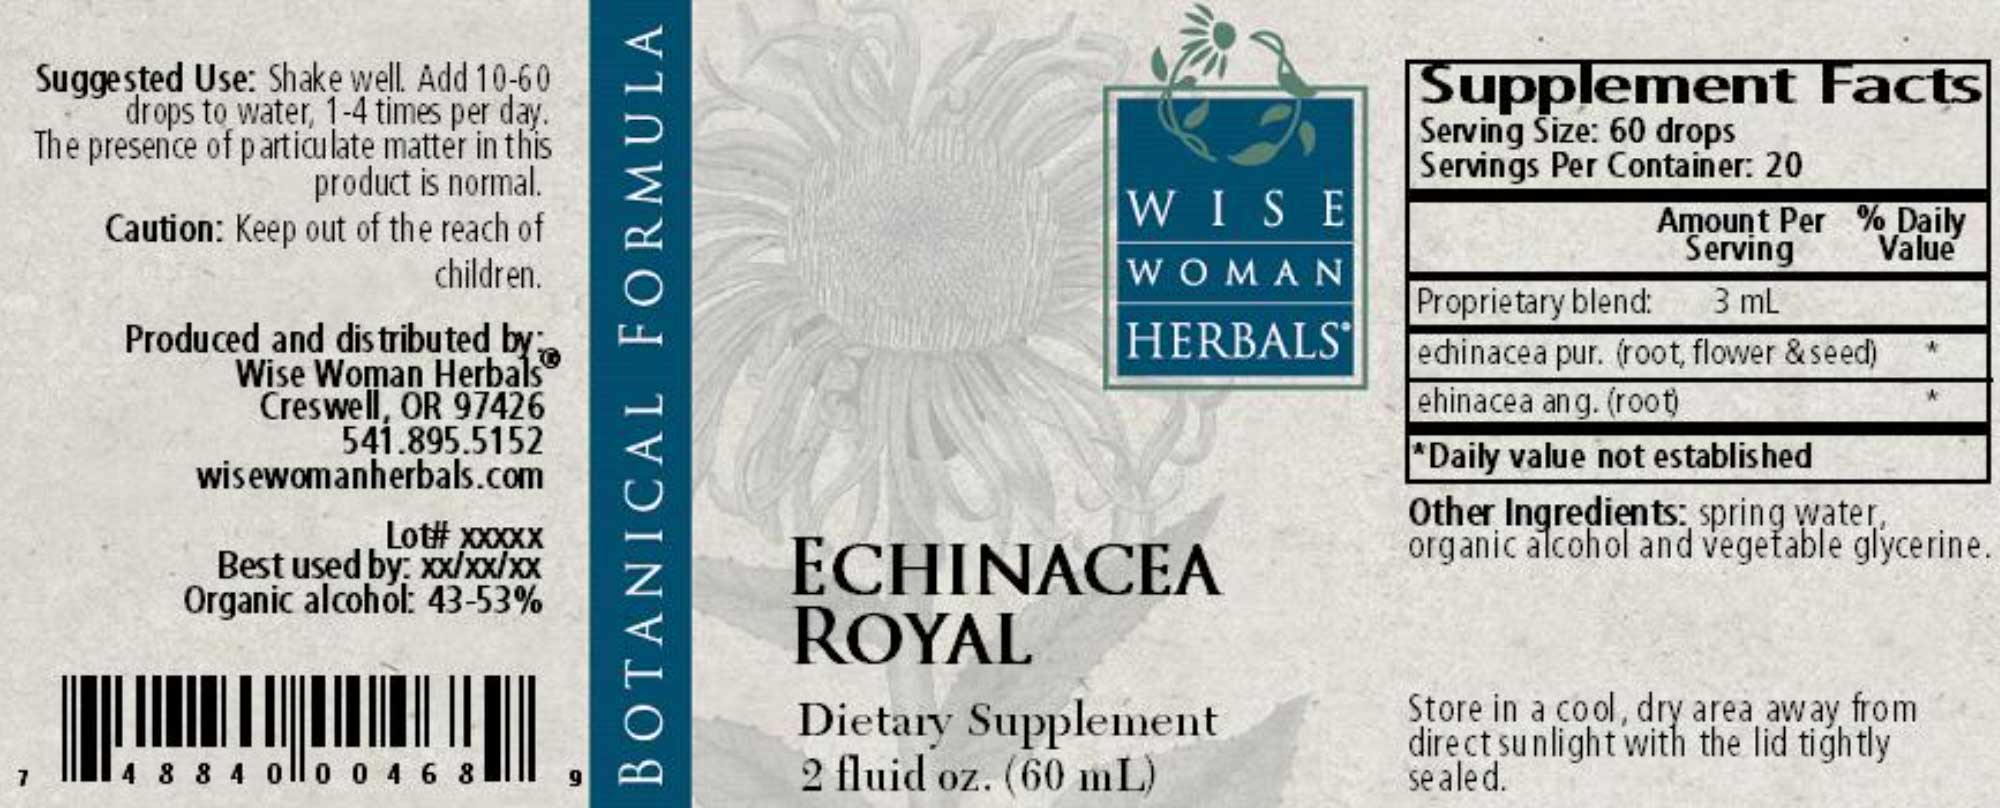 Wise Woman Herbals Echinacea Royal Label